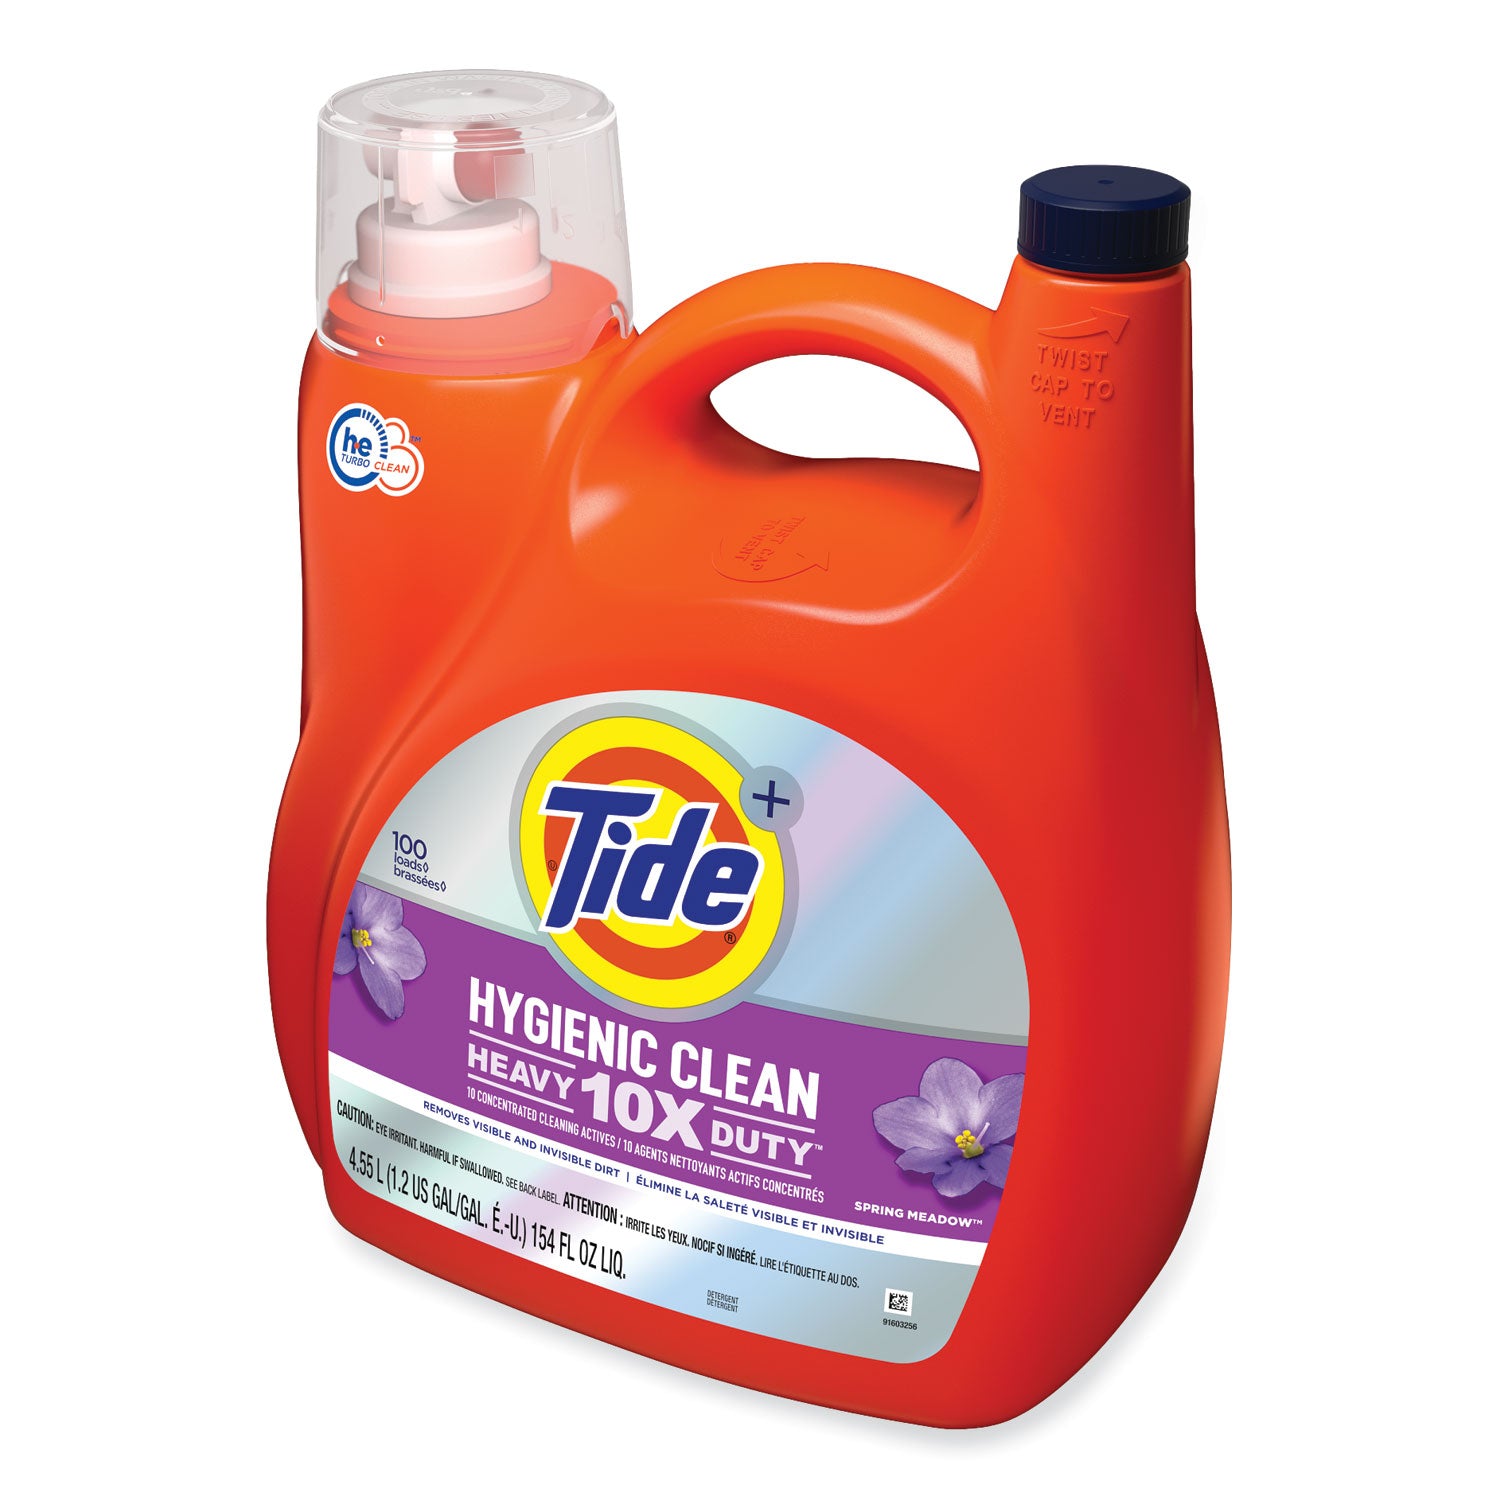 hygienic-clean-heavy-10x-duty-liquid-laundry-detergent-spring-meadow-154-oz-bottle-4-carton_pgc27646 - 4